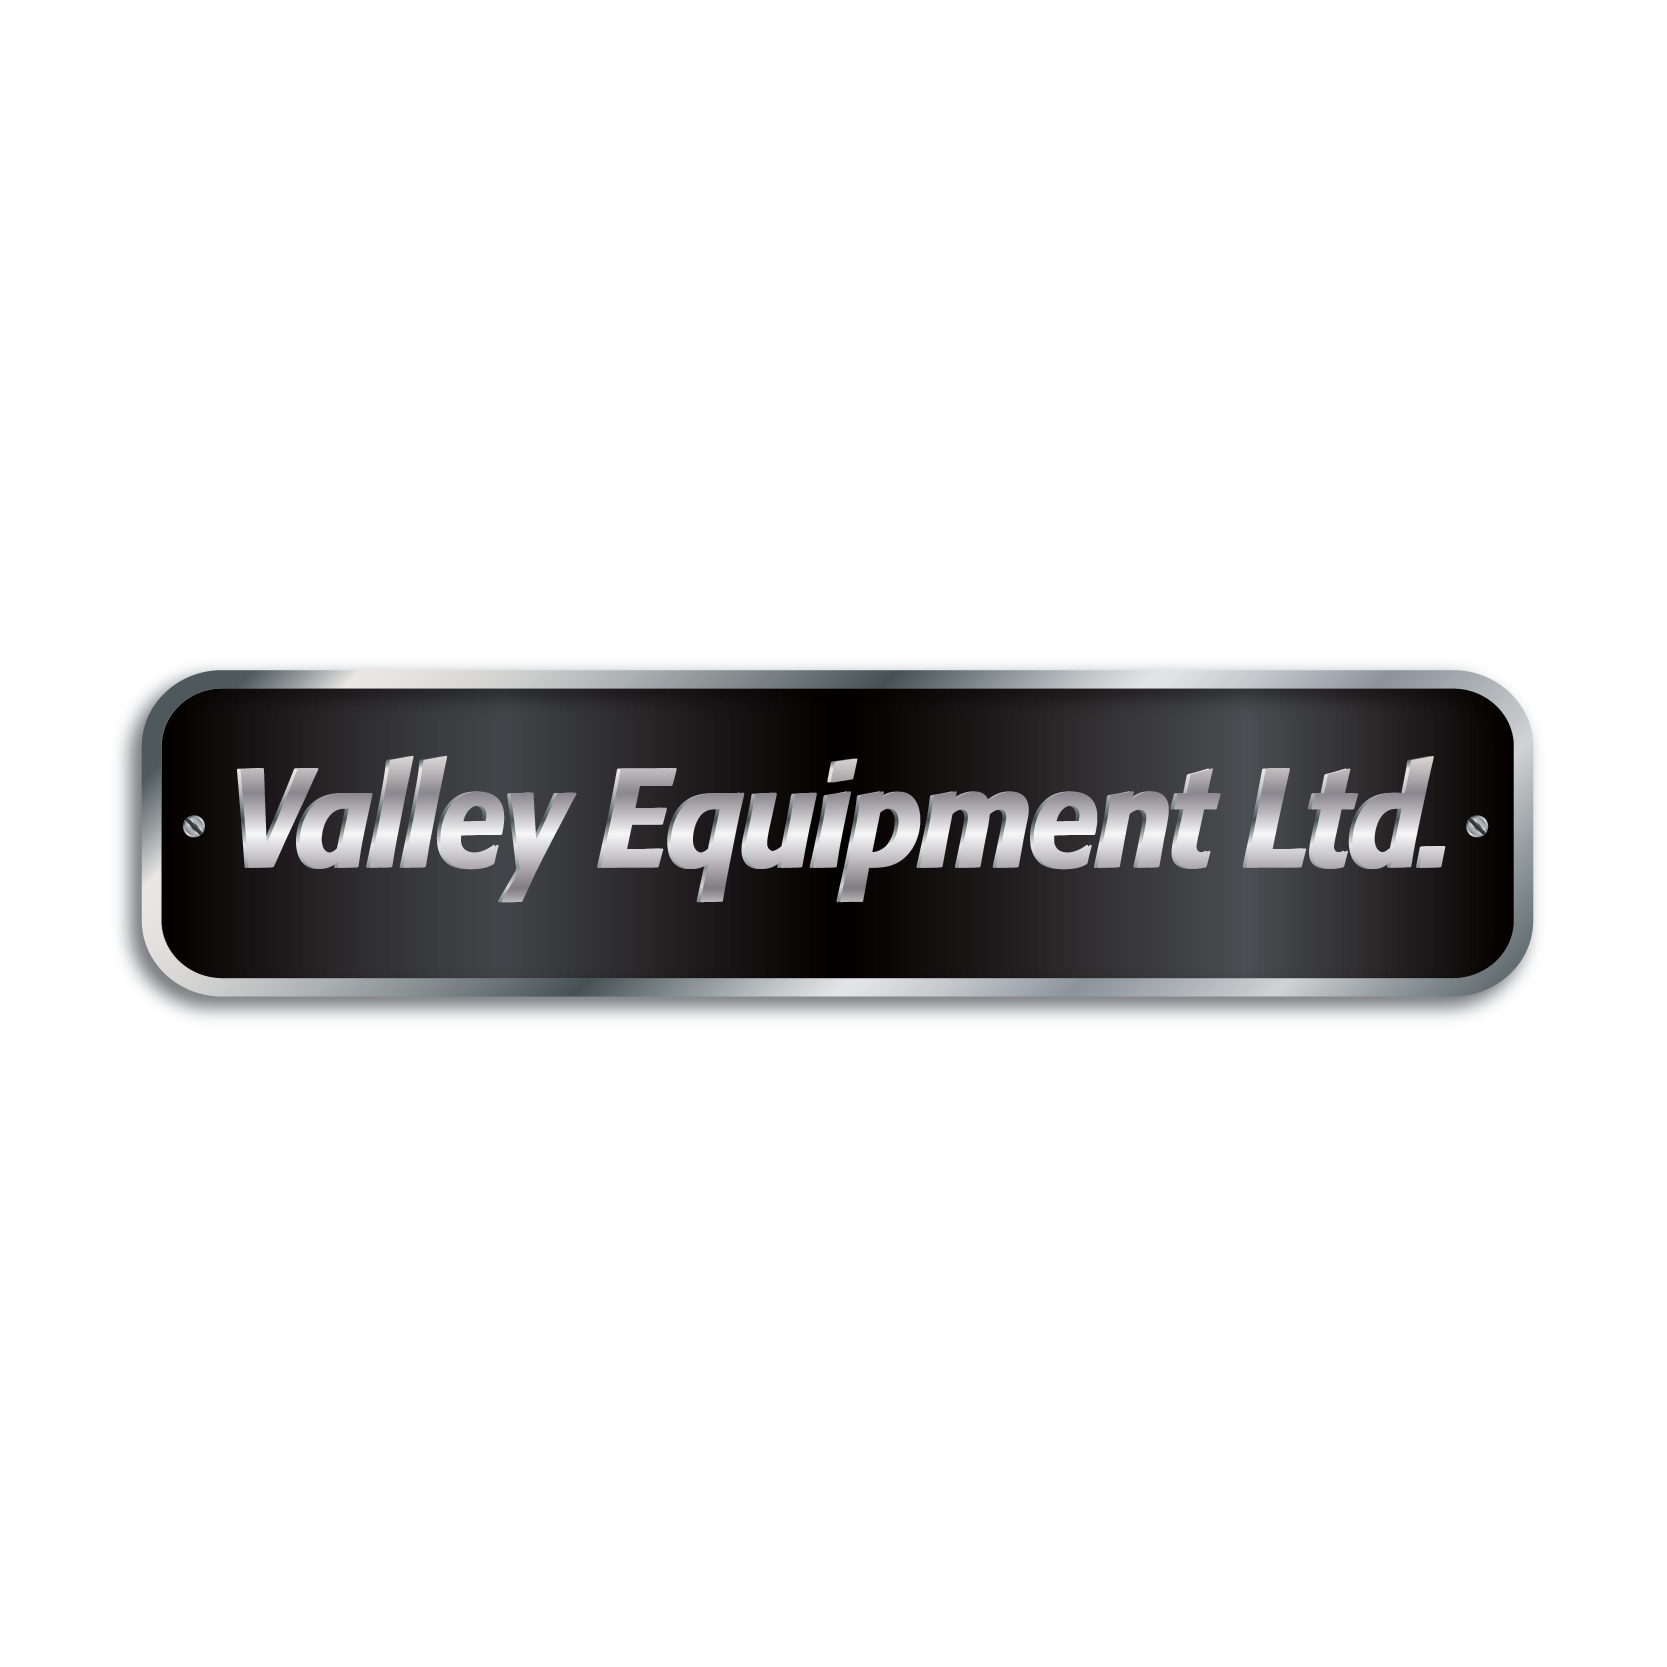 Valley Equipment Ltd